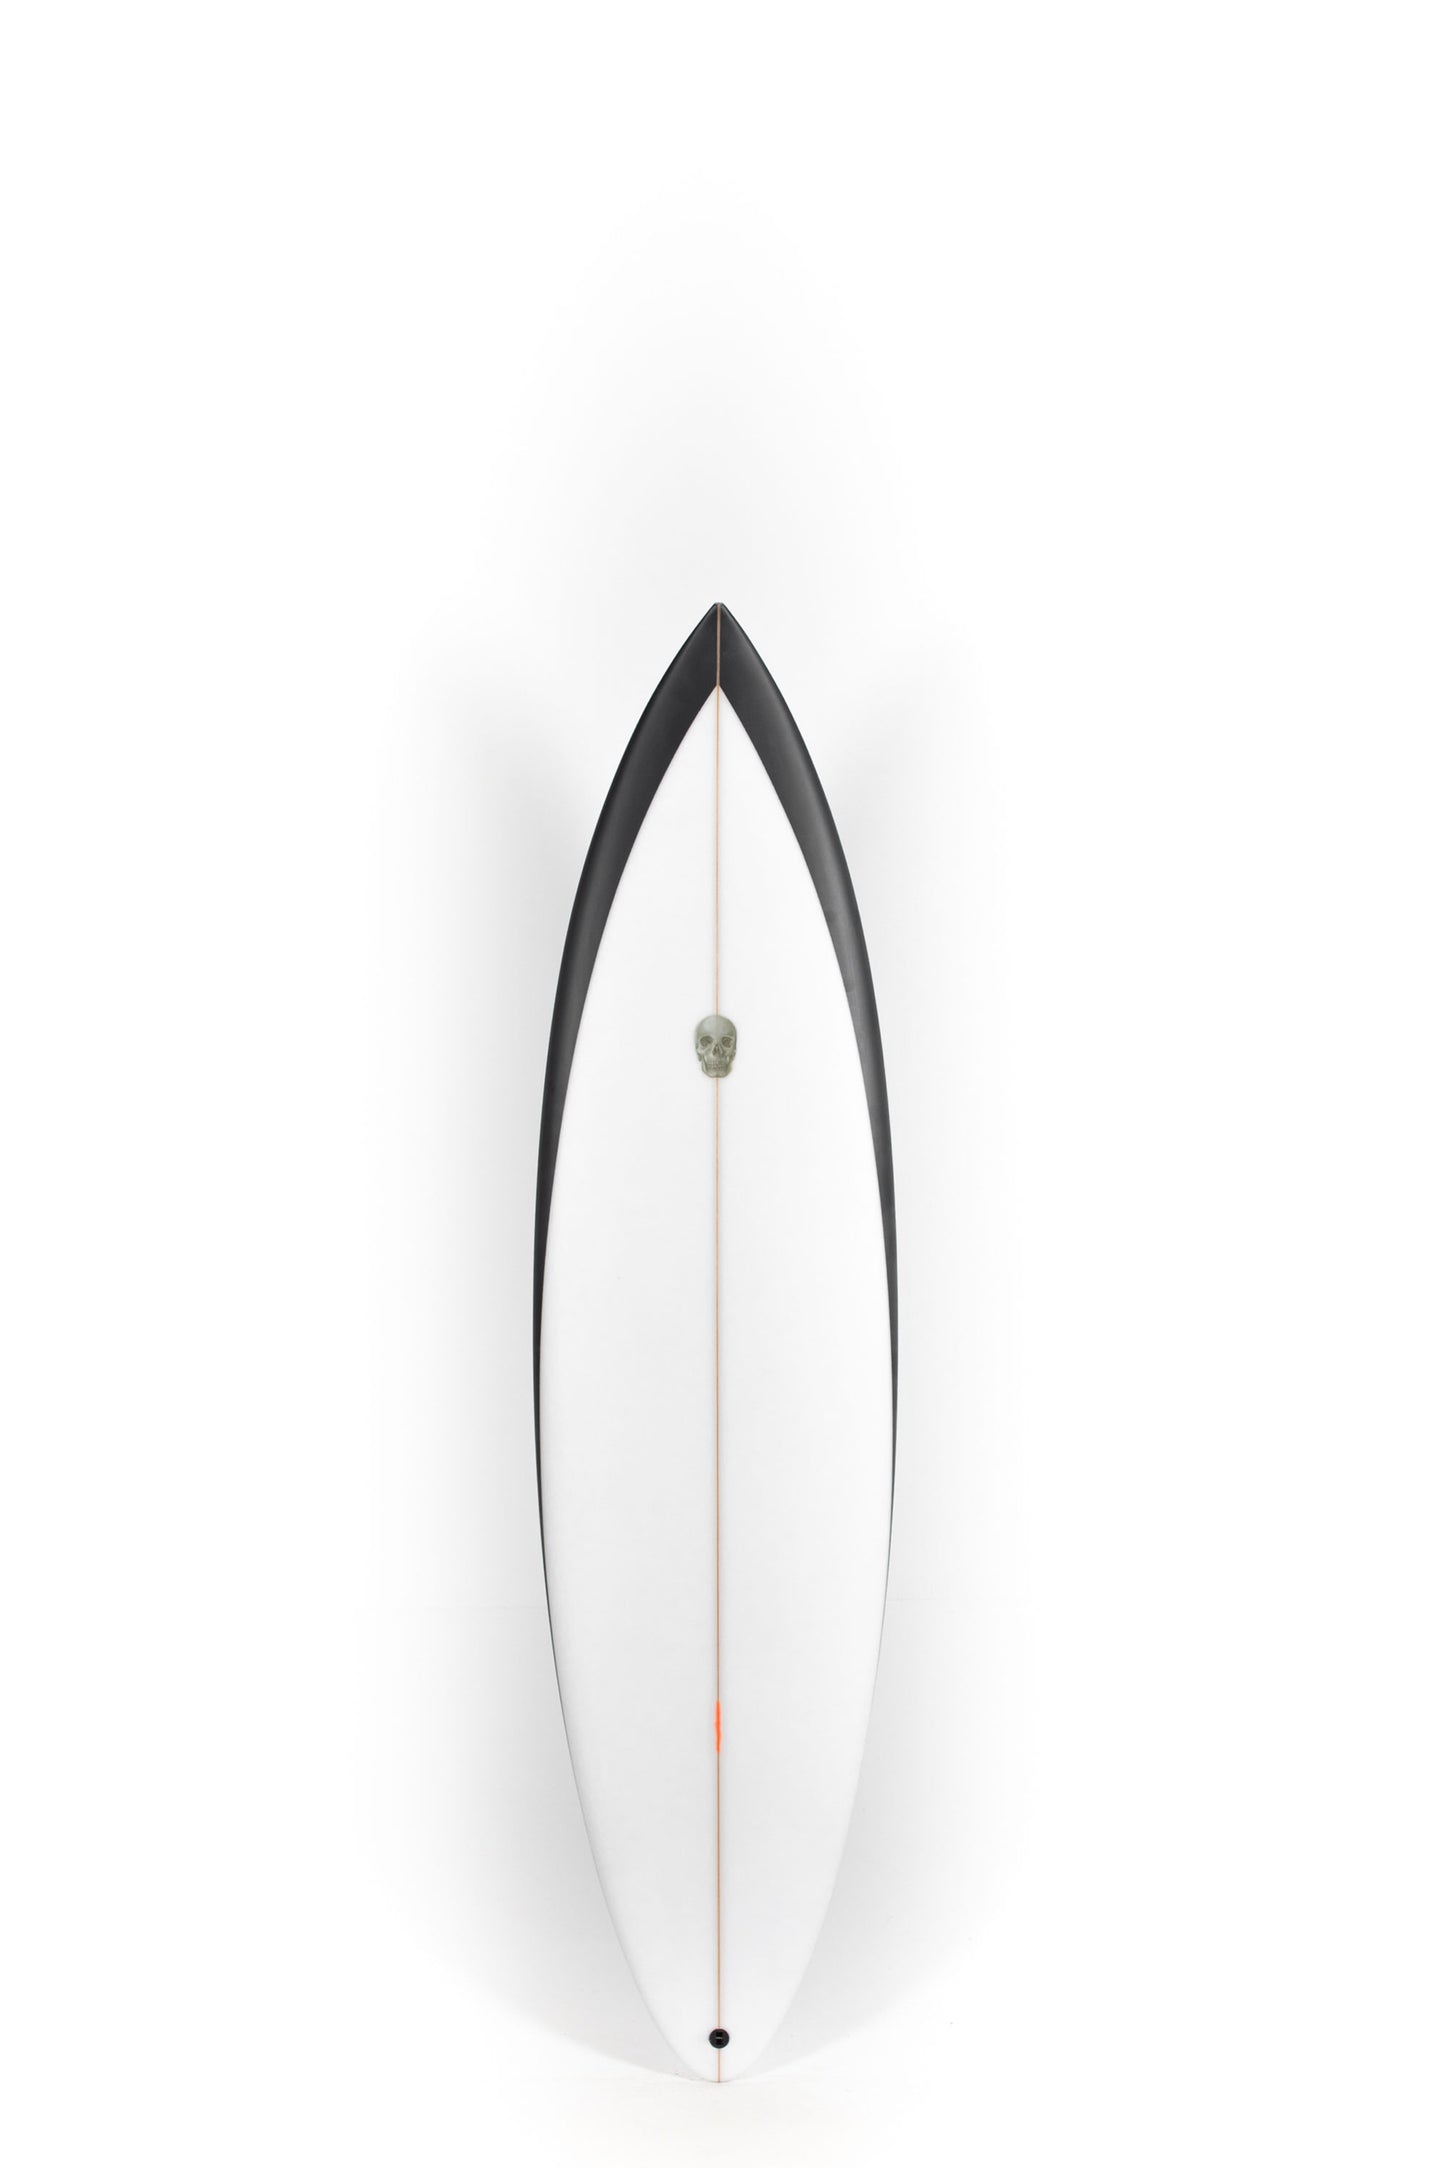 Pukas Surf Shop - Christenson Surfboards - CARRERA - 6'6" x 19 1/2 x 2 5/8 - 36,53L - CX04791